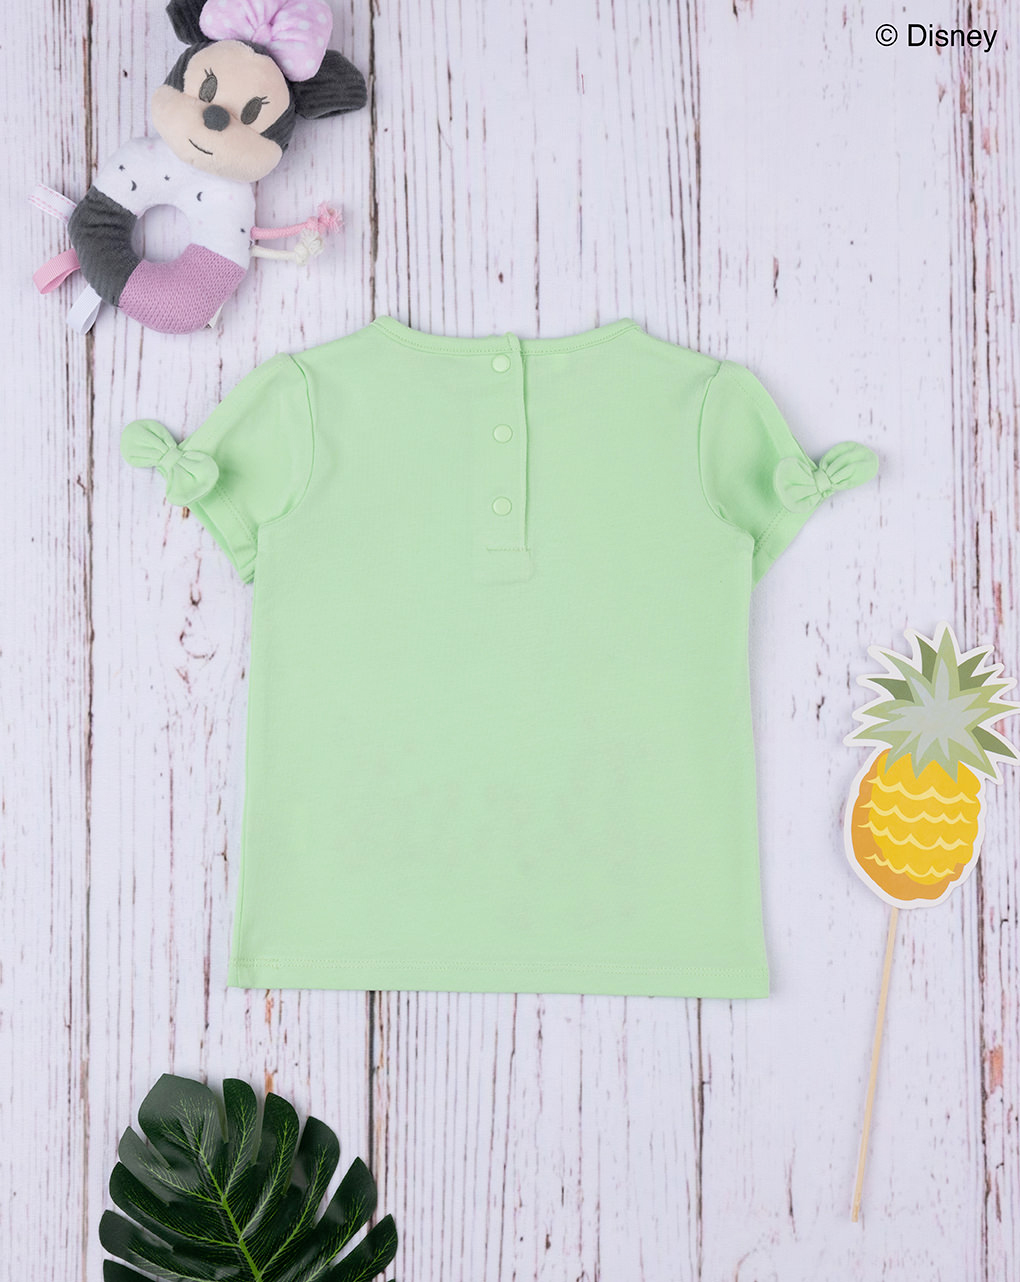 Camiseta niña "minnie" algodón orgánico - Prénatal